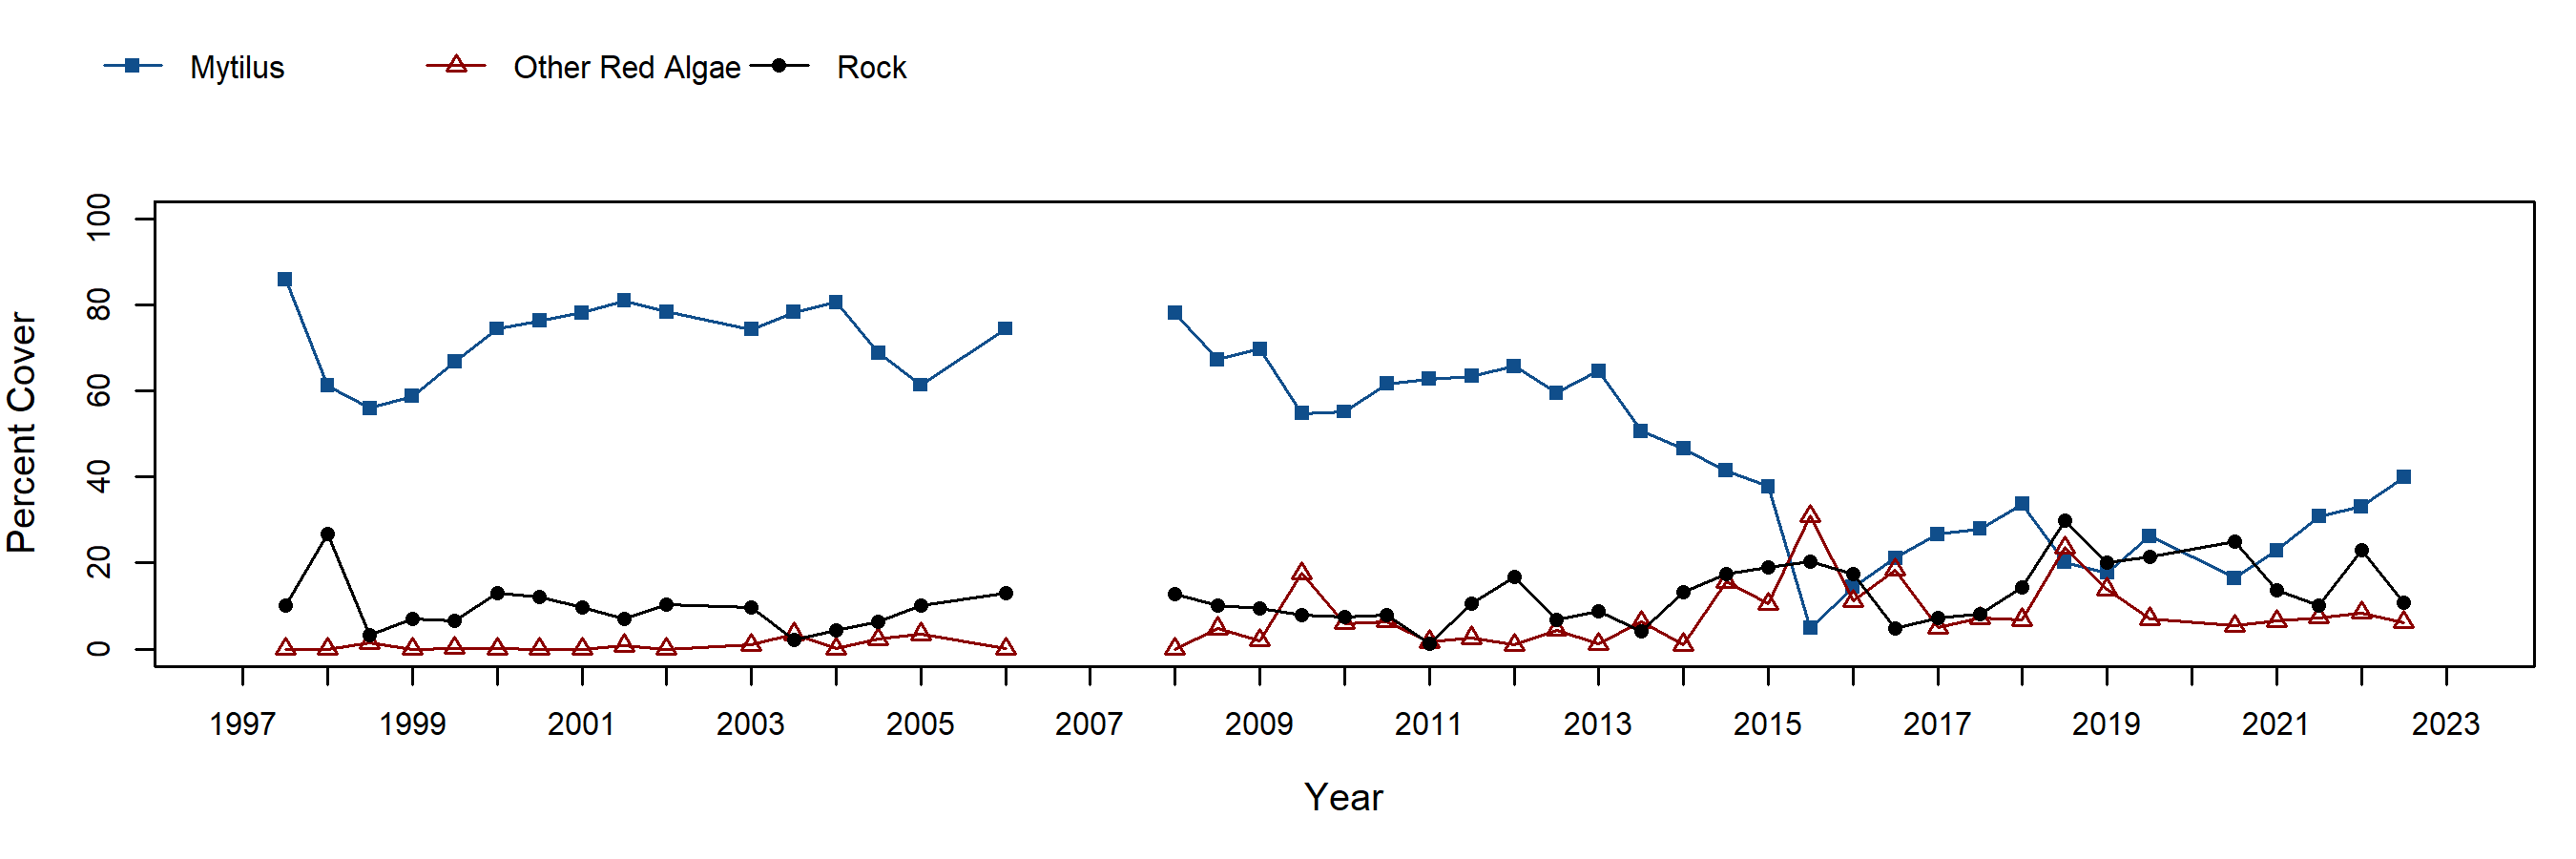 Cardiff Reef Mytilus trend plot